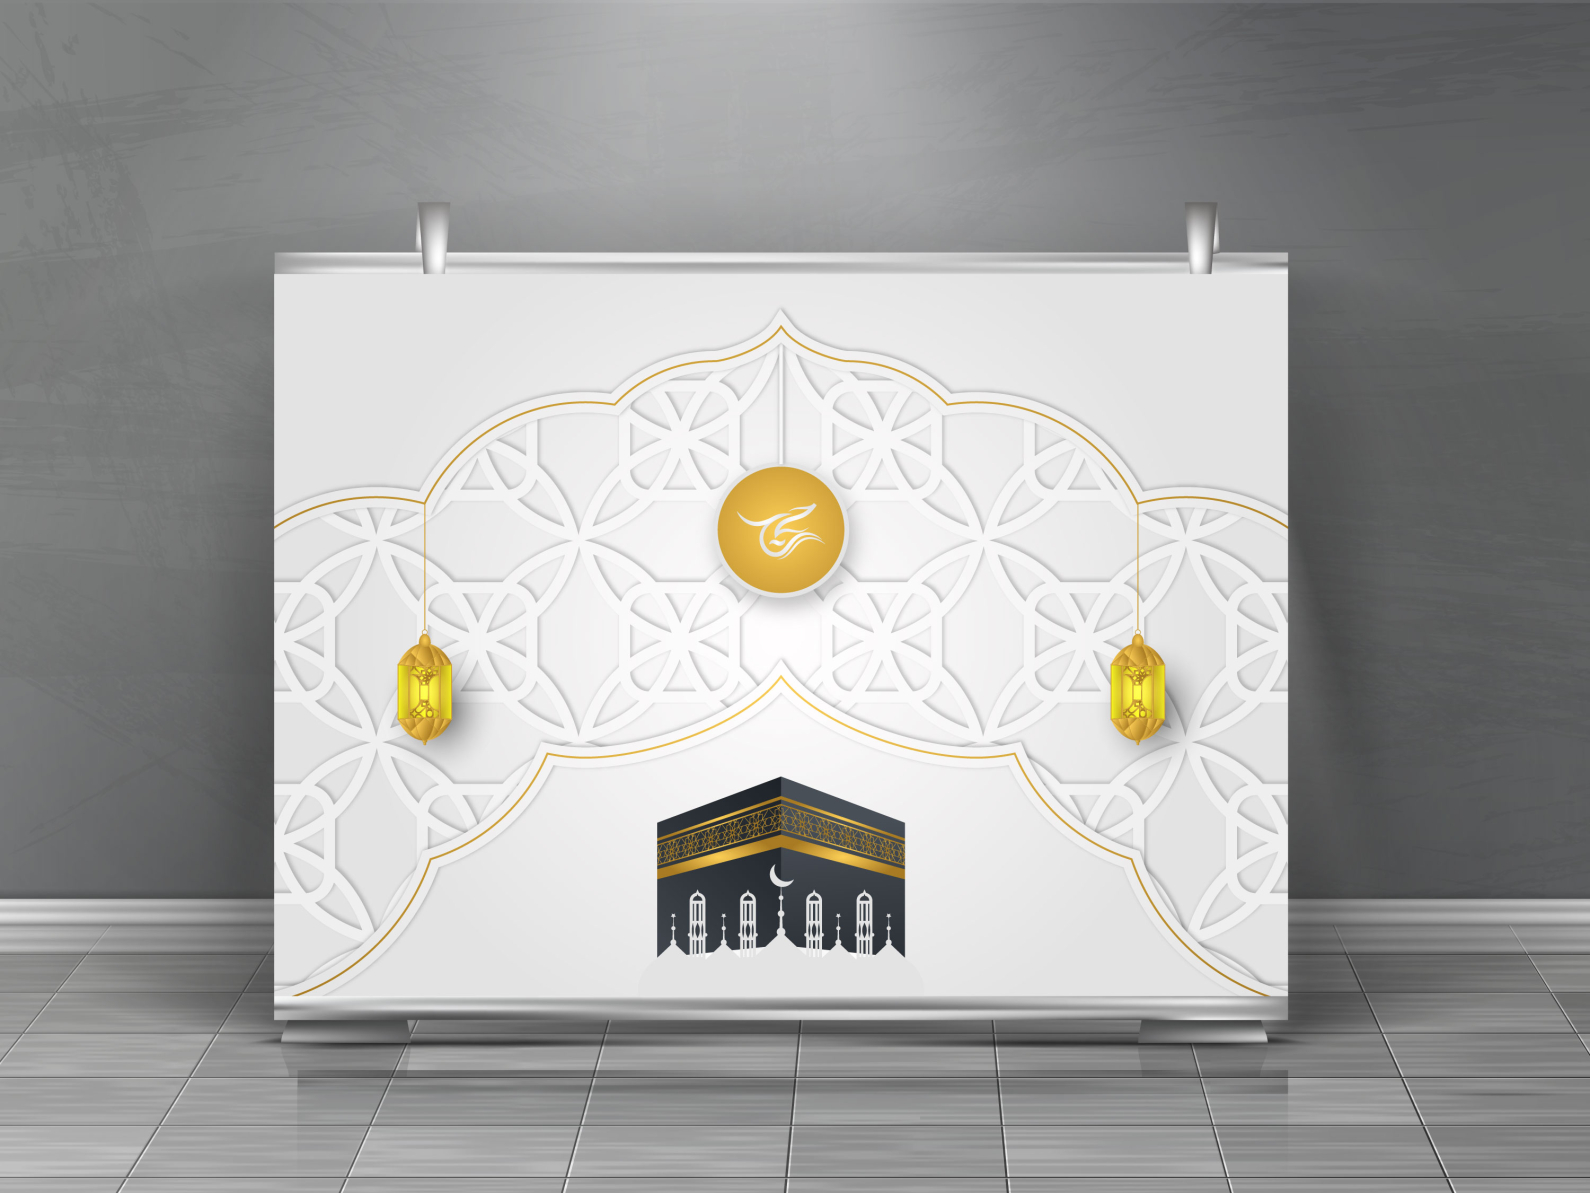 hajj-banner-design-by-tanvir-shuvo-on-dribbble